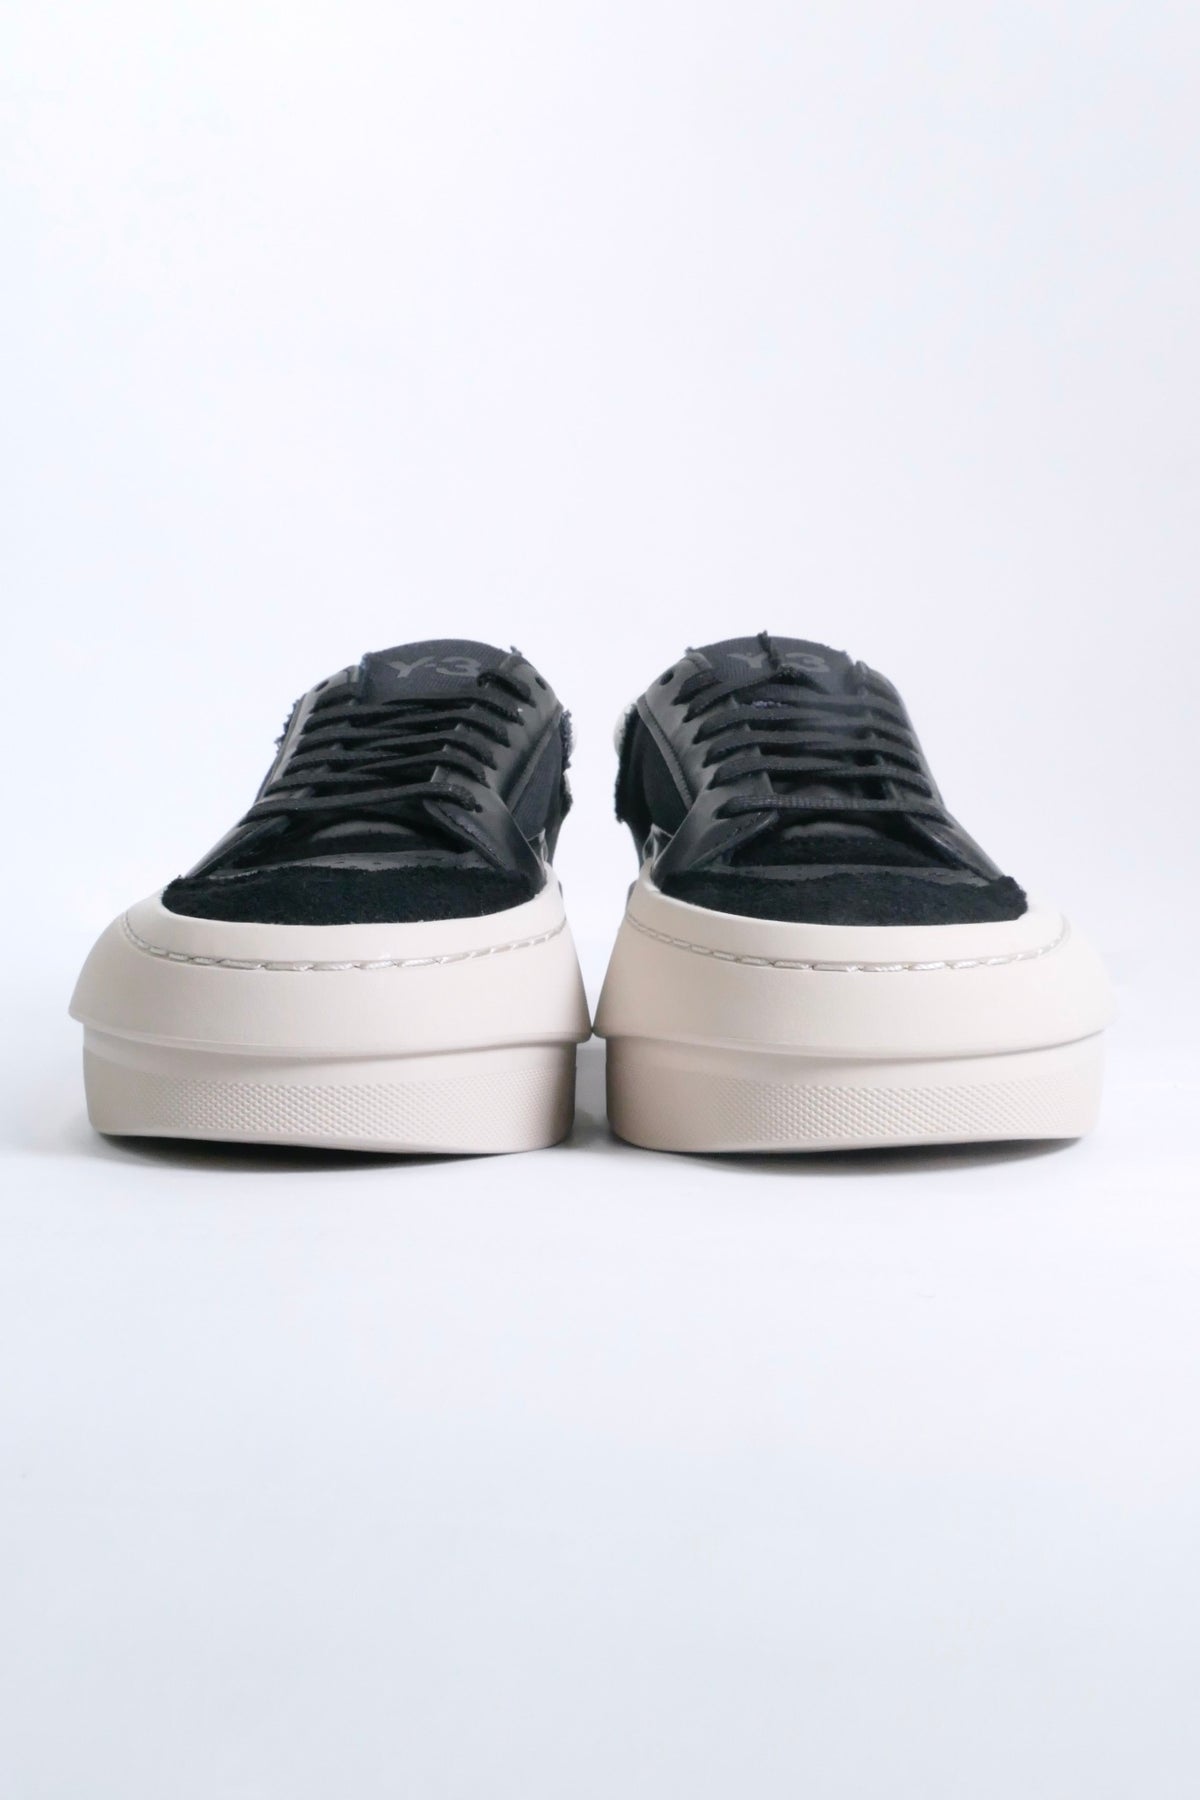 Y-3 Centennial Lo Sneakers - Black/White